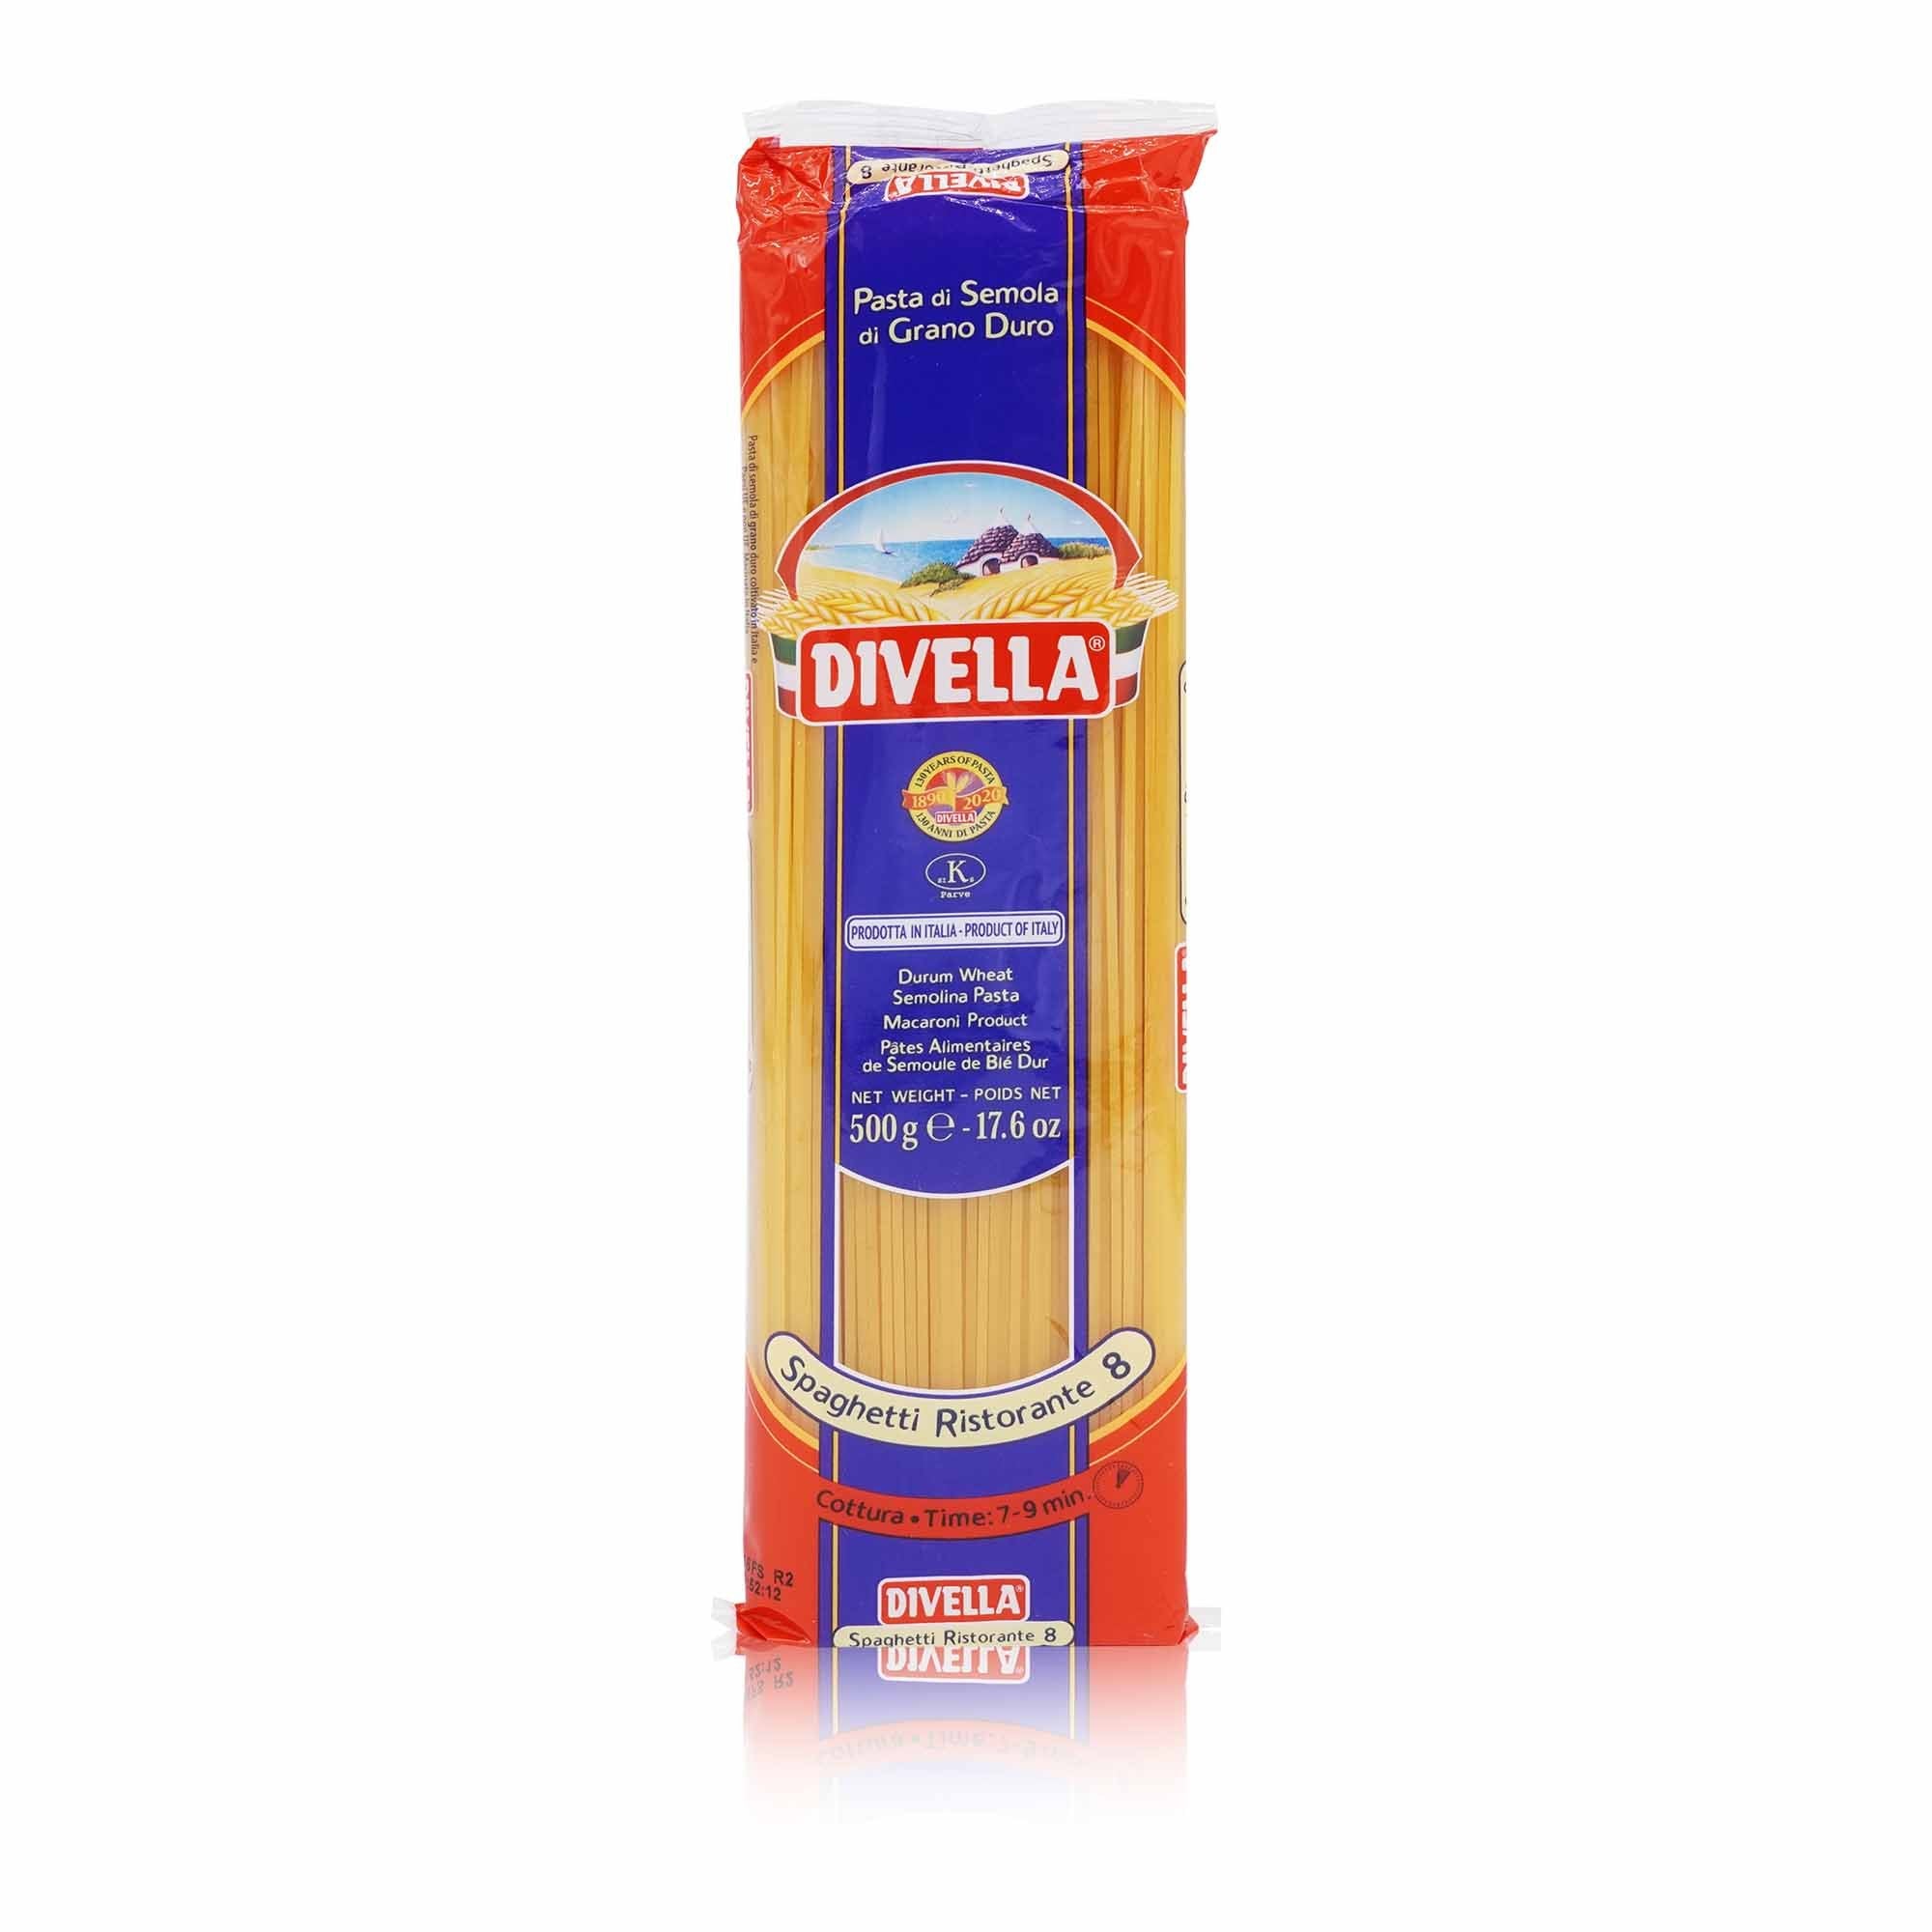 DIVELLA - Spaghetti Ristorante Nr. 8 - 0,5kg - italienisch - einkaufen.de